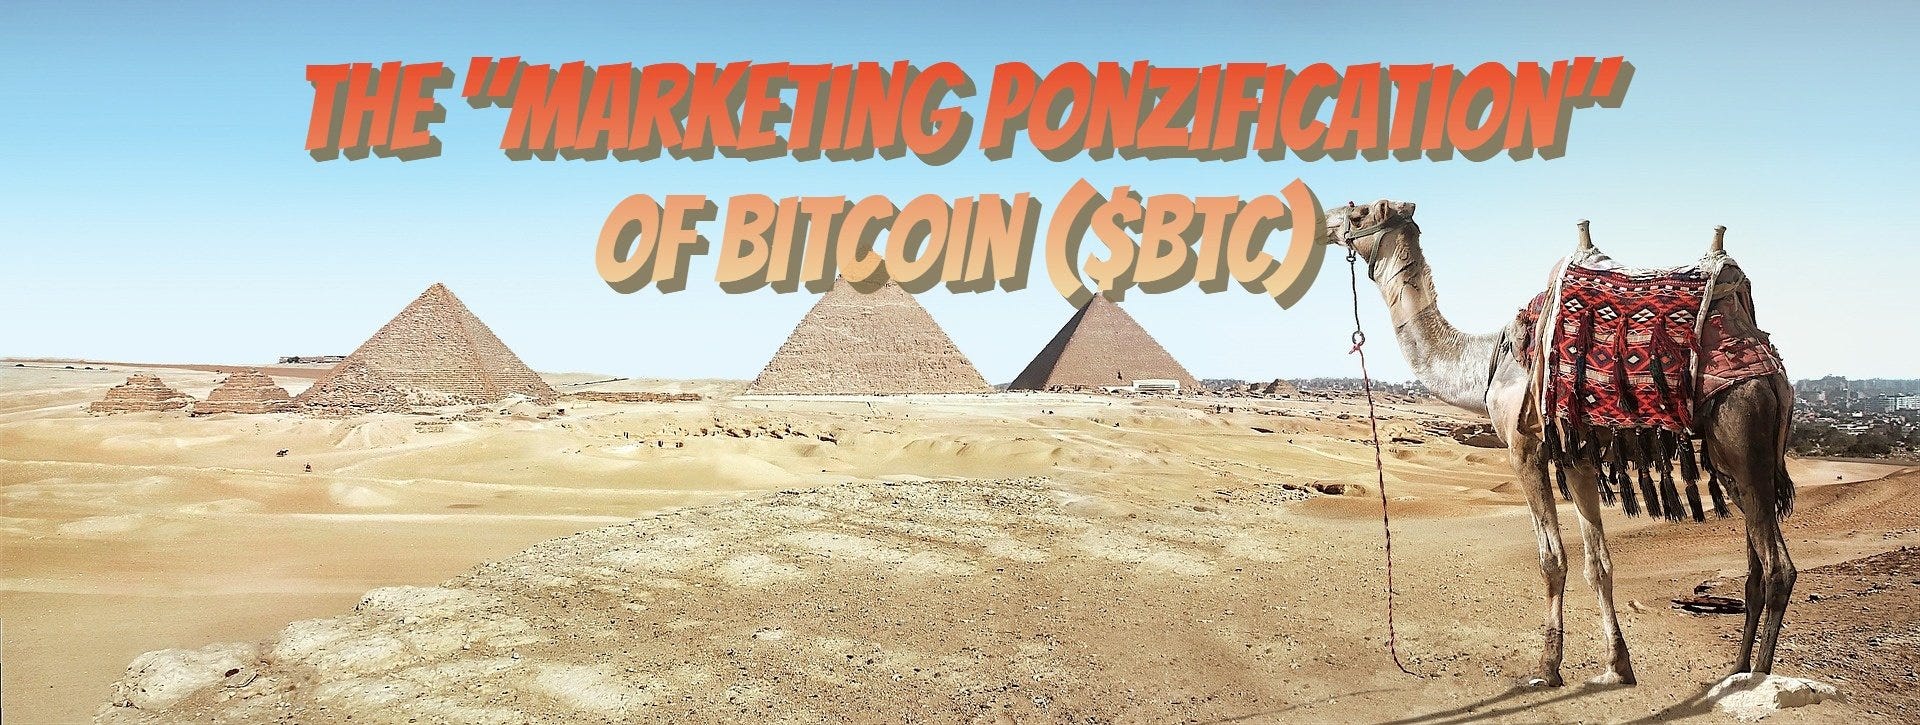 The Marketing Ponzification of Bitcoin ($BTC)